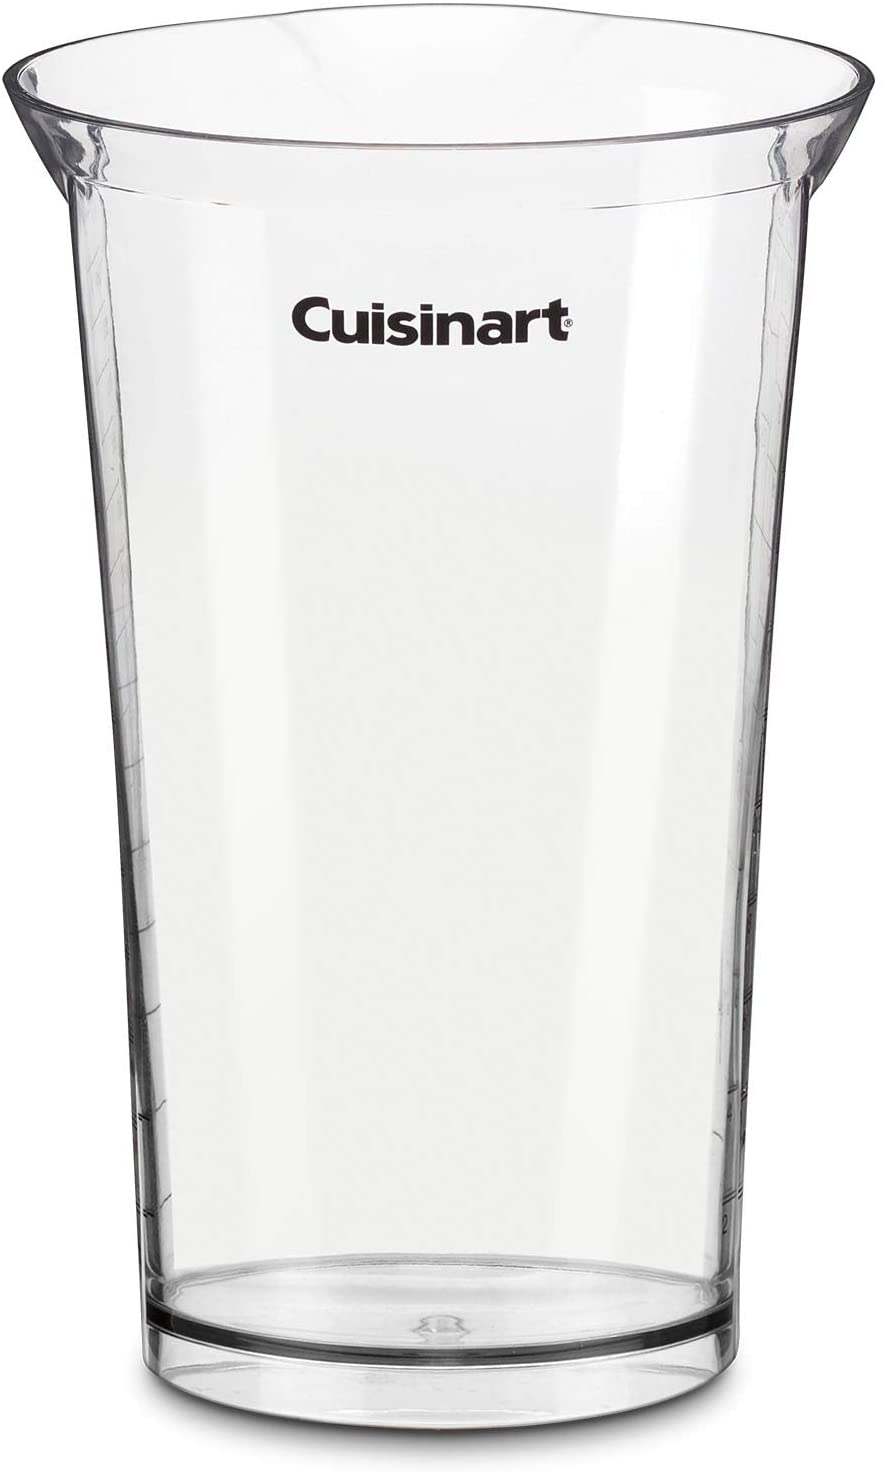 Cuisinart CSB-175 2 Speed Hand Blender - Certified Refurbished